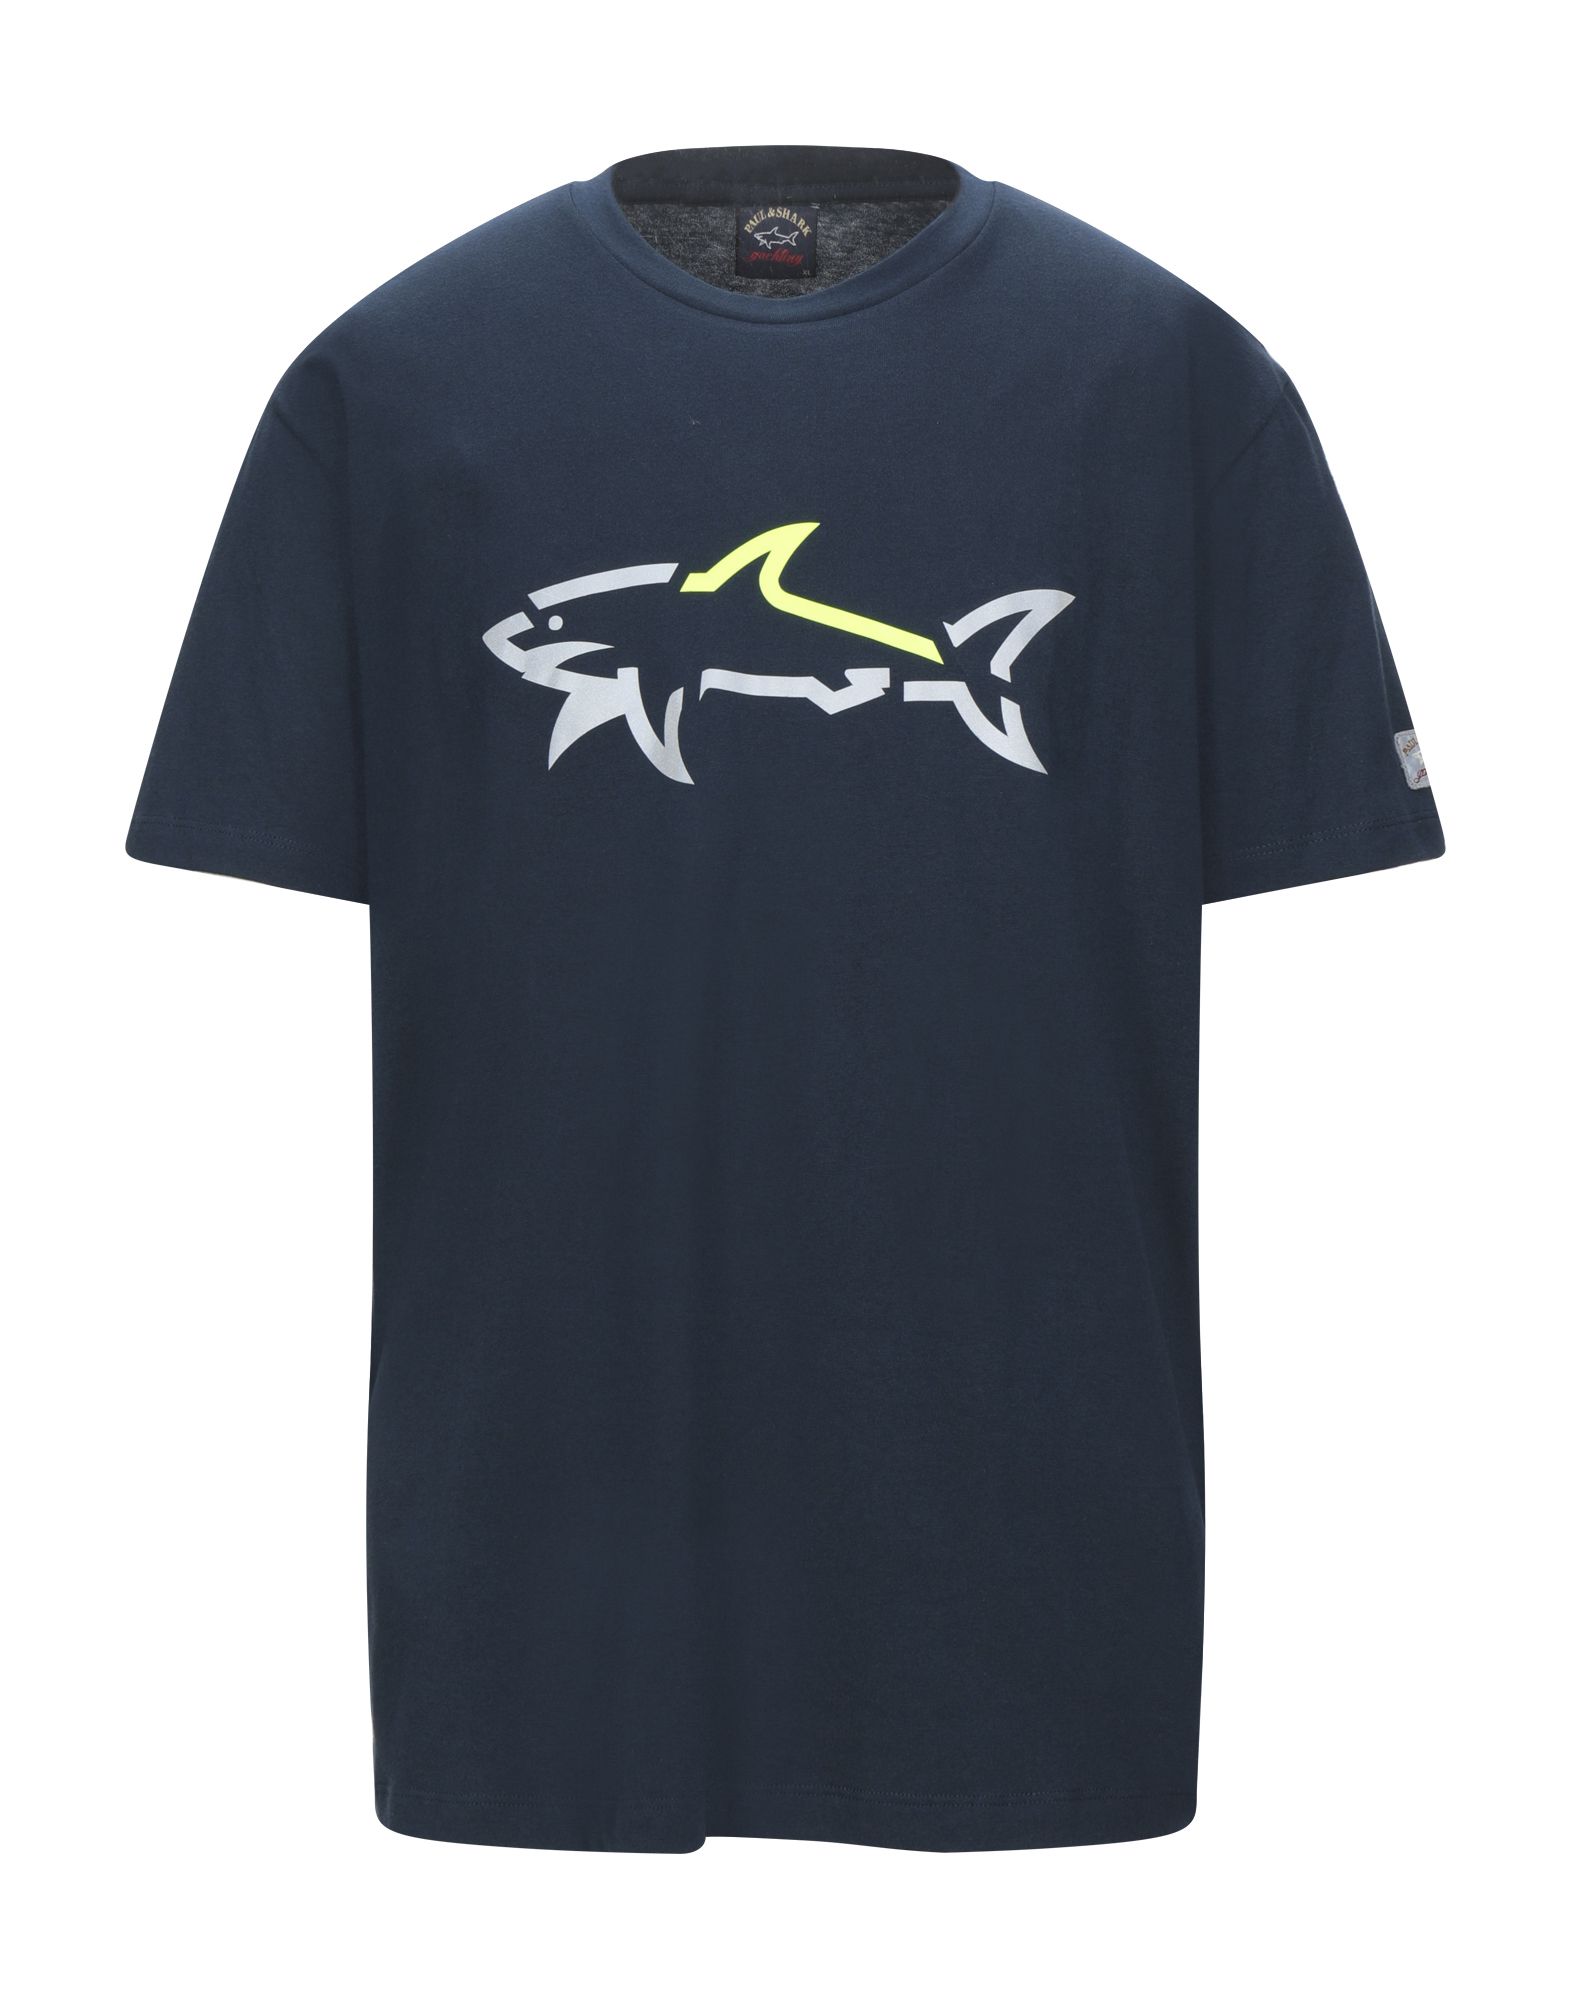 PAUL & SHARK T-shirts - Item 12505451